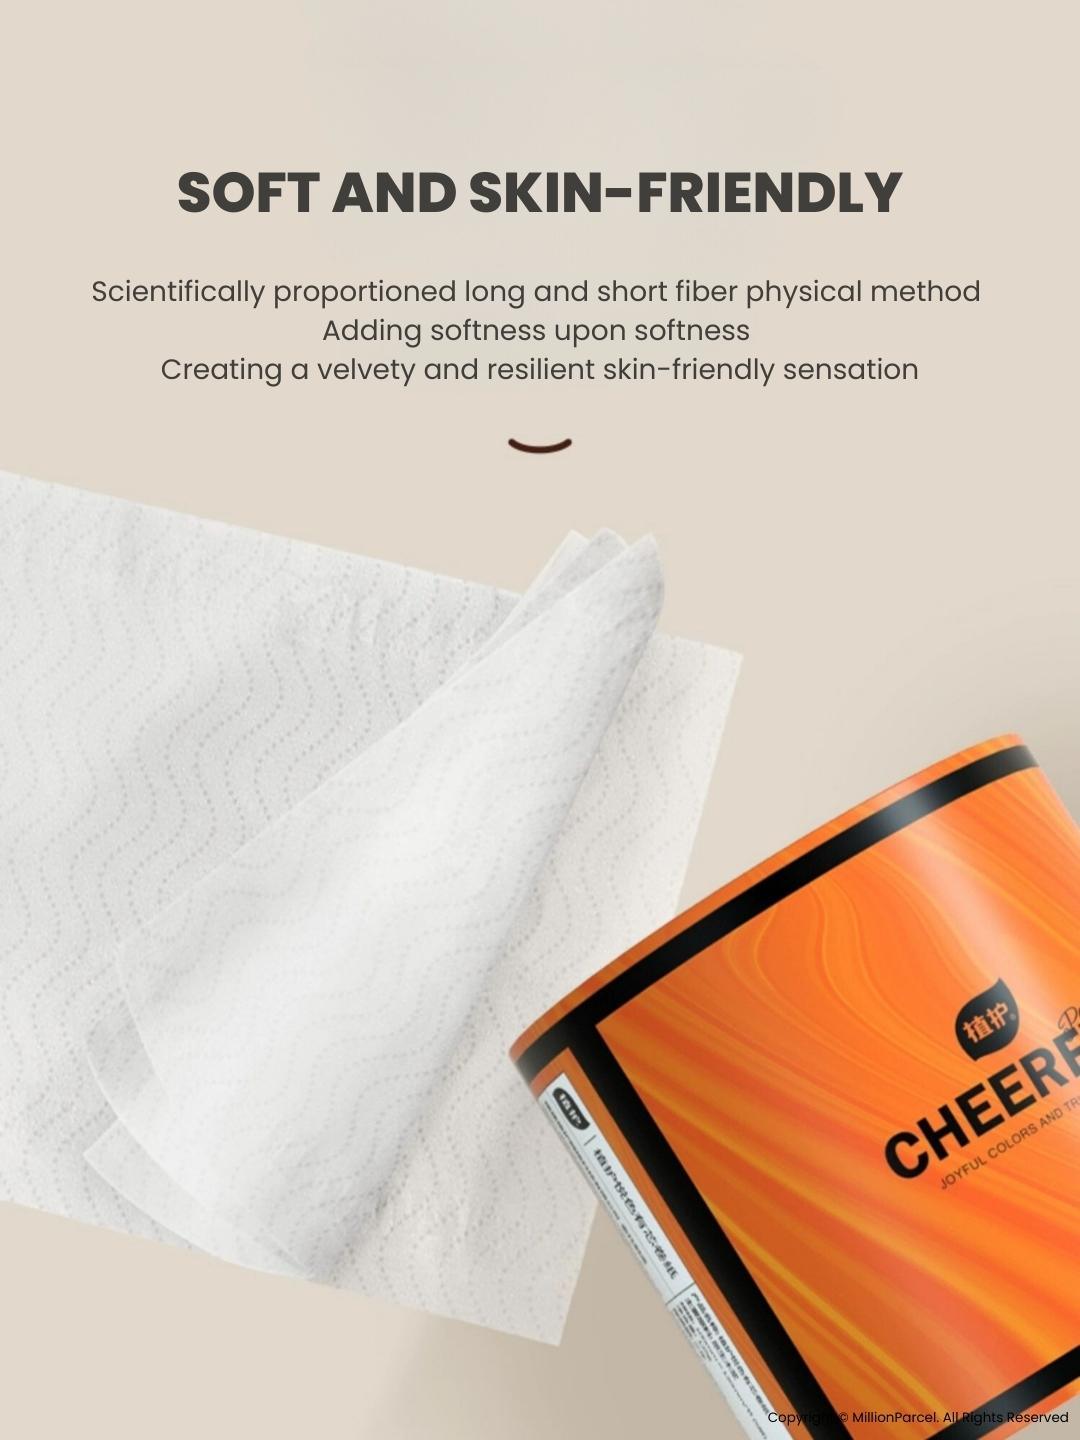 Botare Toilet Paper 5ply | Air Cushion Cheerful Design - MillionParcel